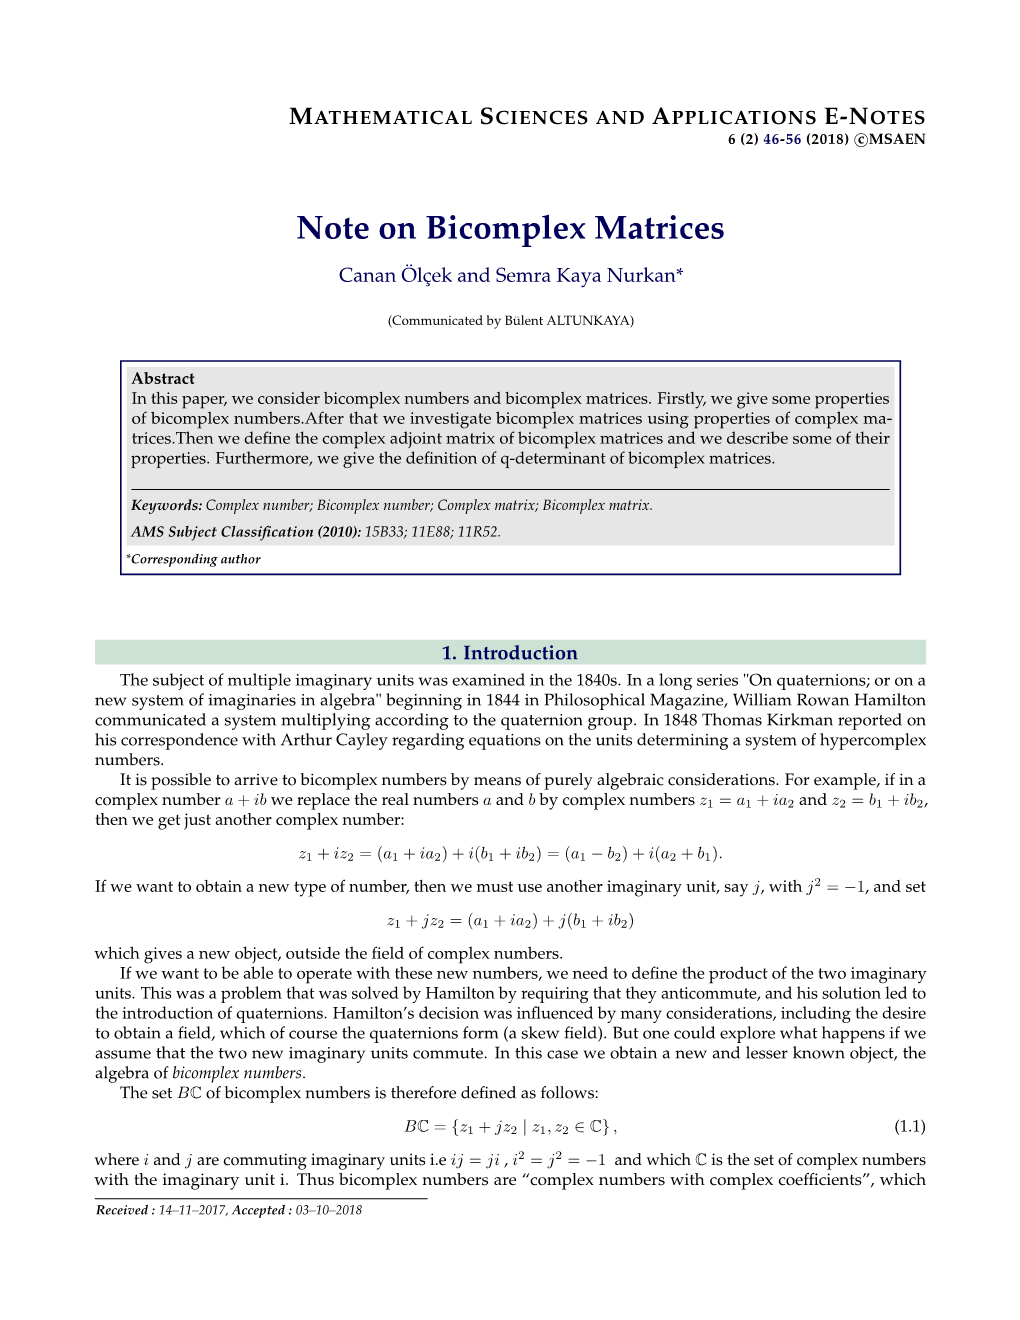 Note on Bicomplex Matrices